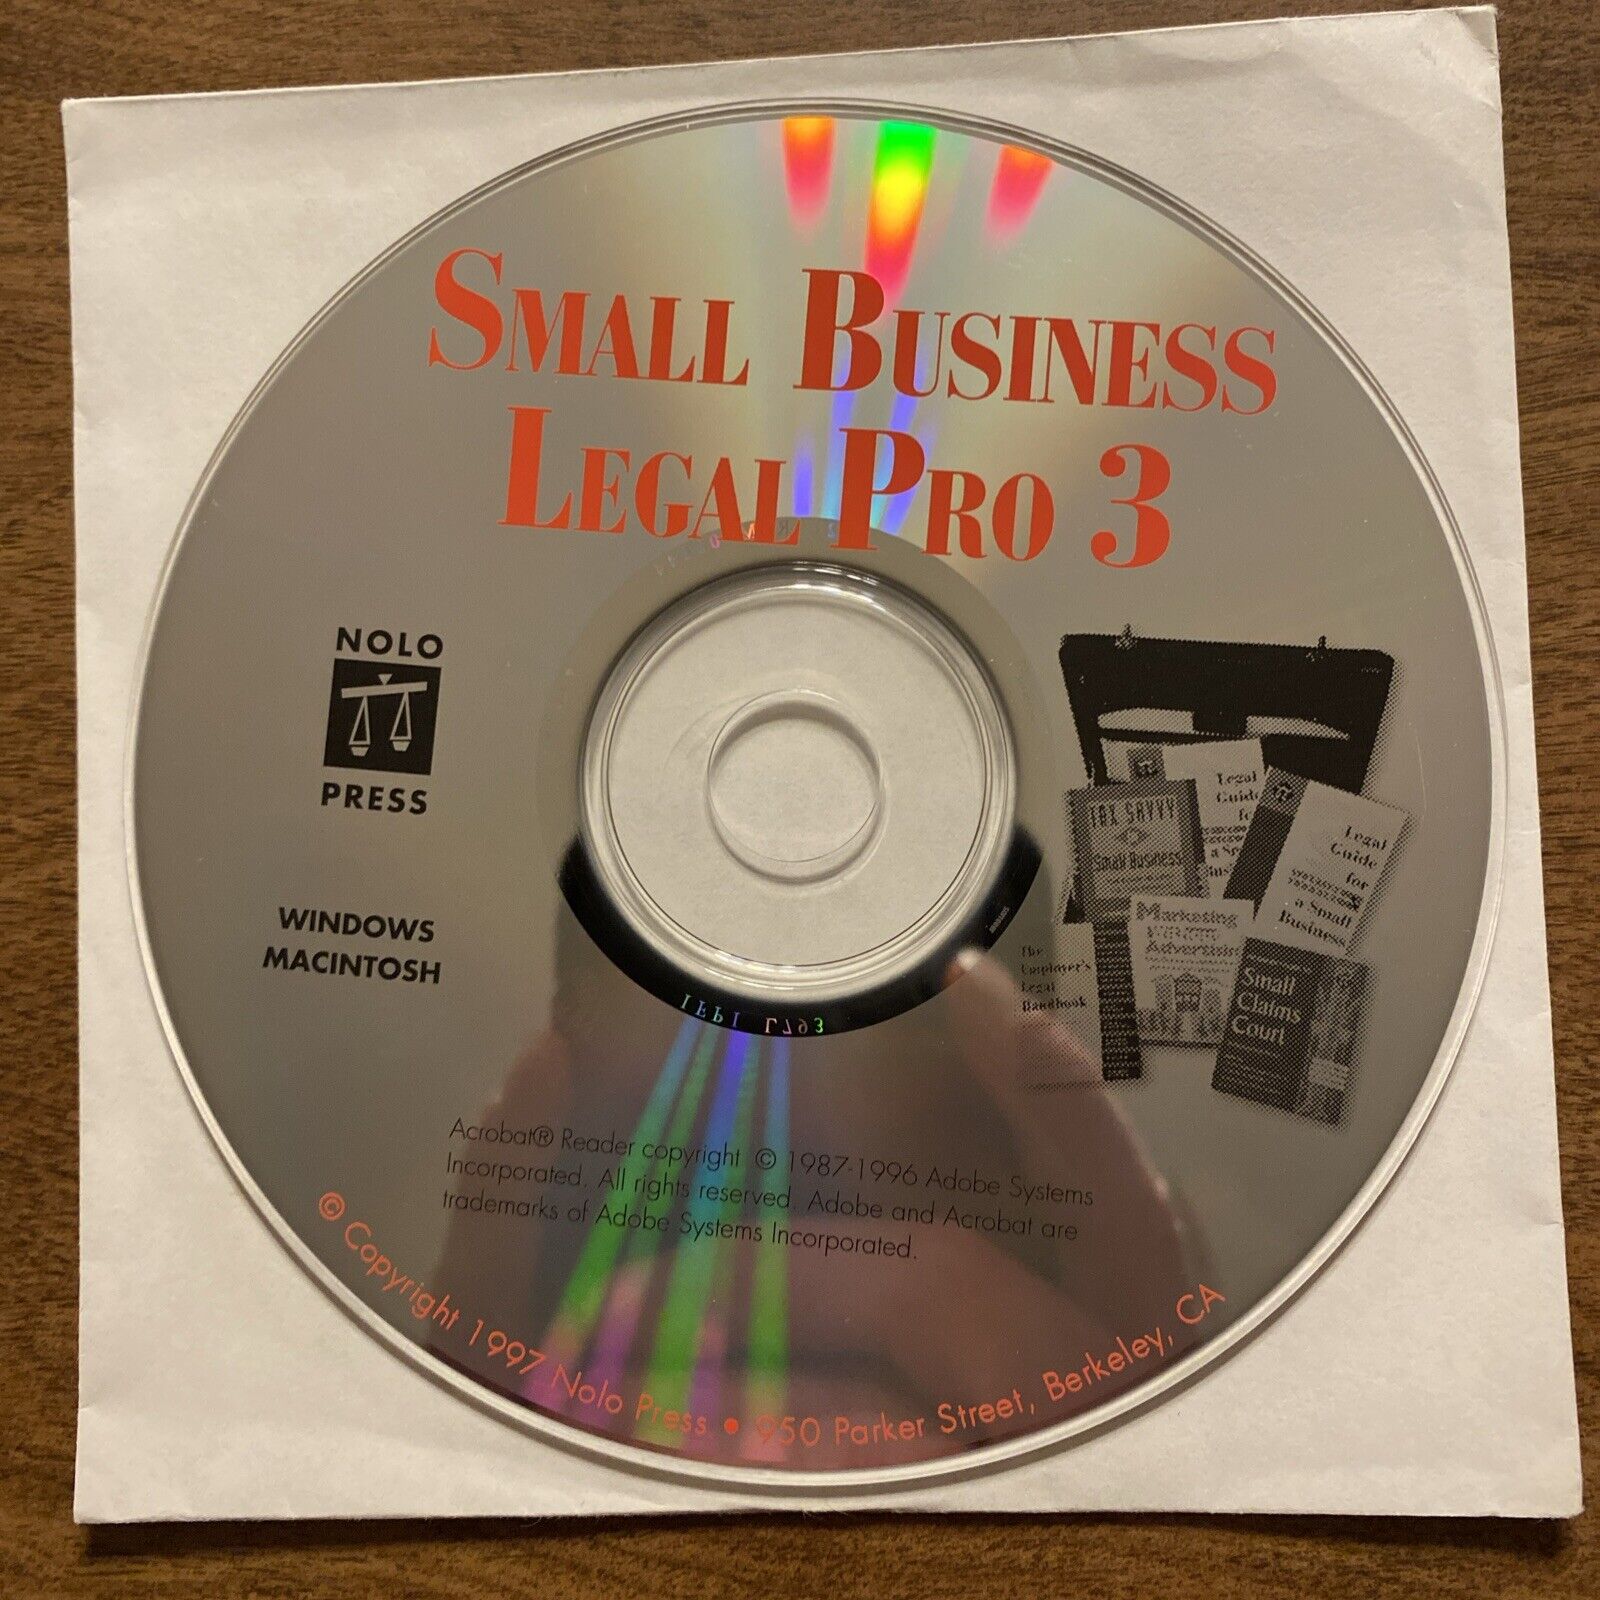 Small Business Legal Pro 3 Compact Disc CD 1997 Windows & Mac PCs Nolo Press VTG